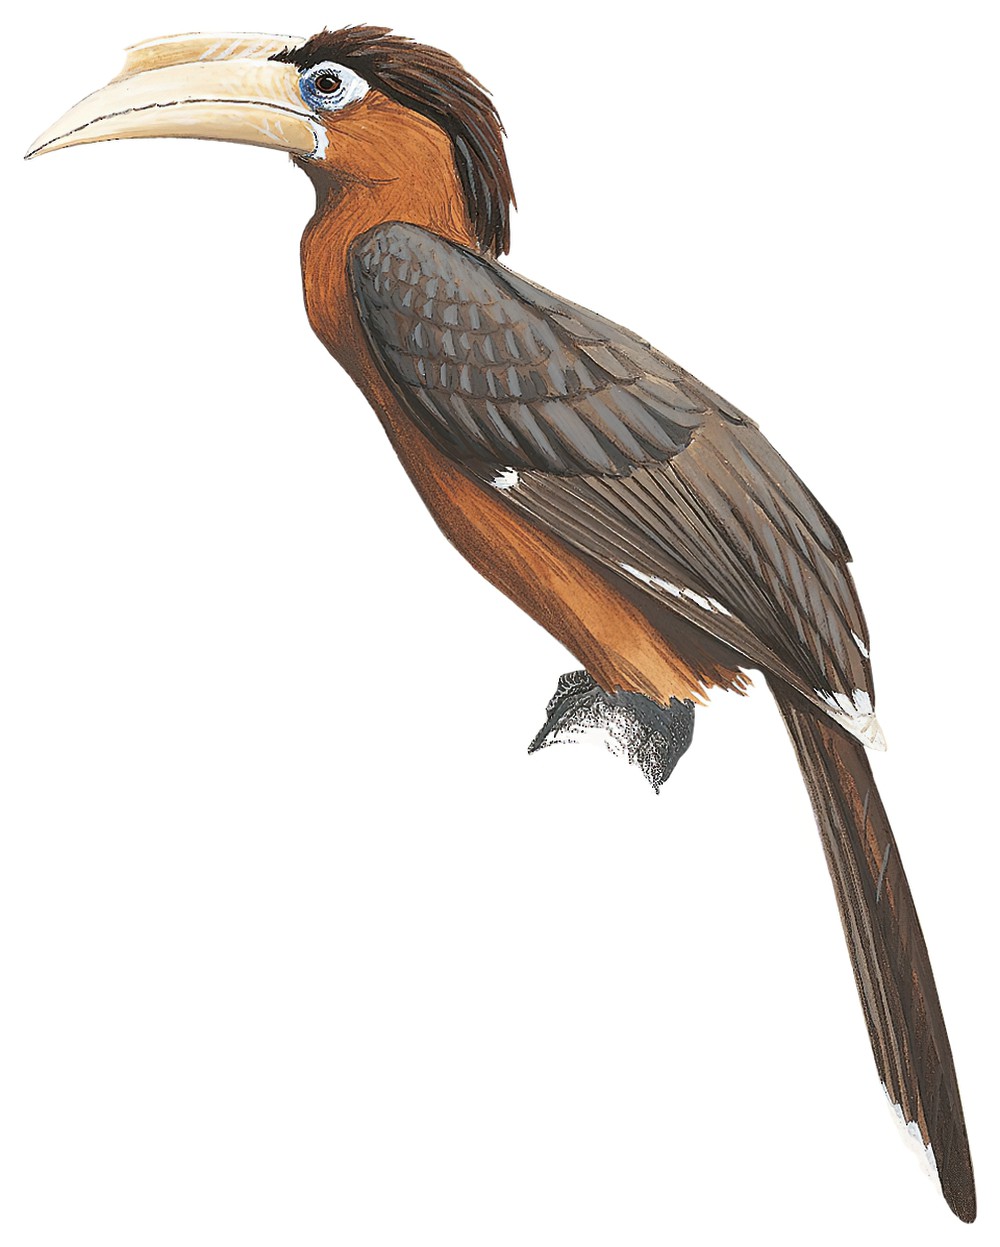 Rusty-cheeked Hornbill / Anorrhinus tickelli